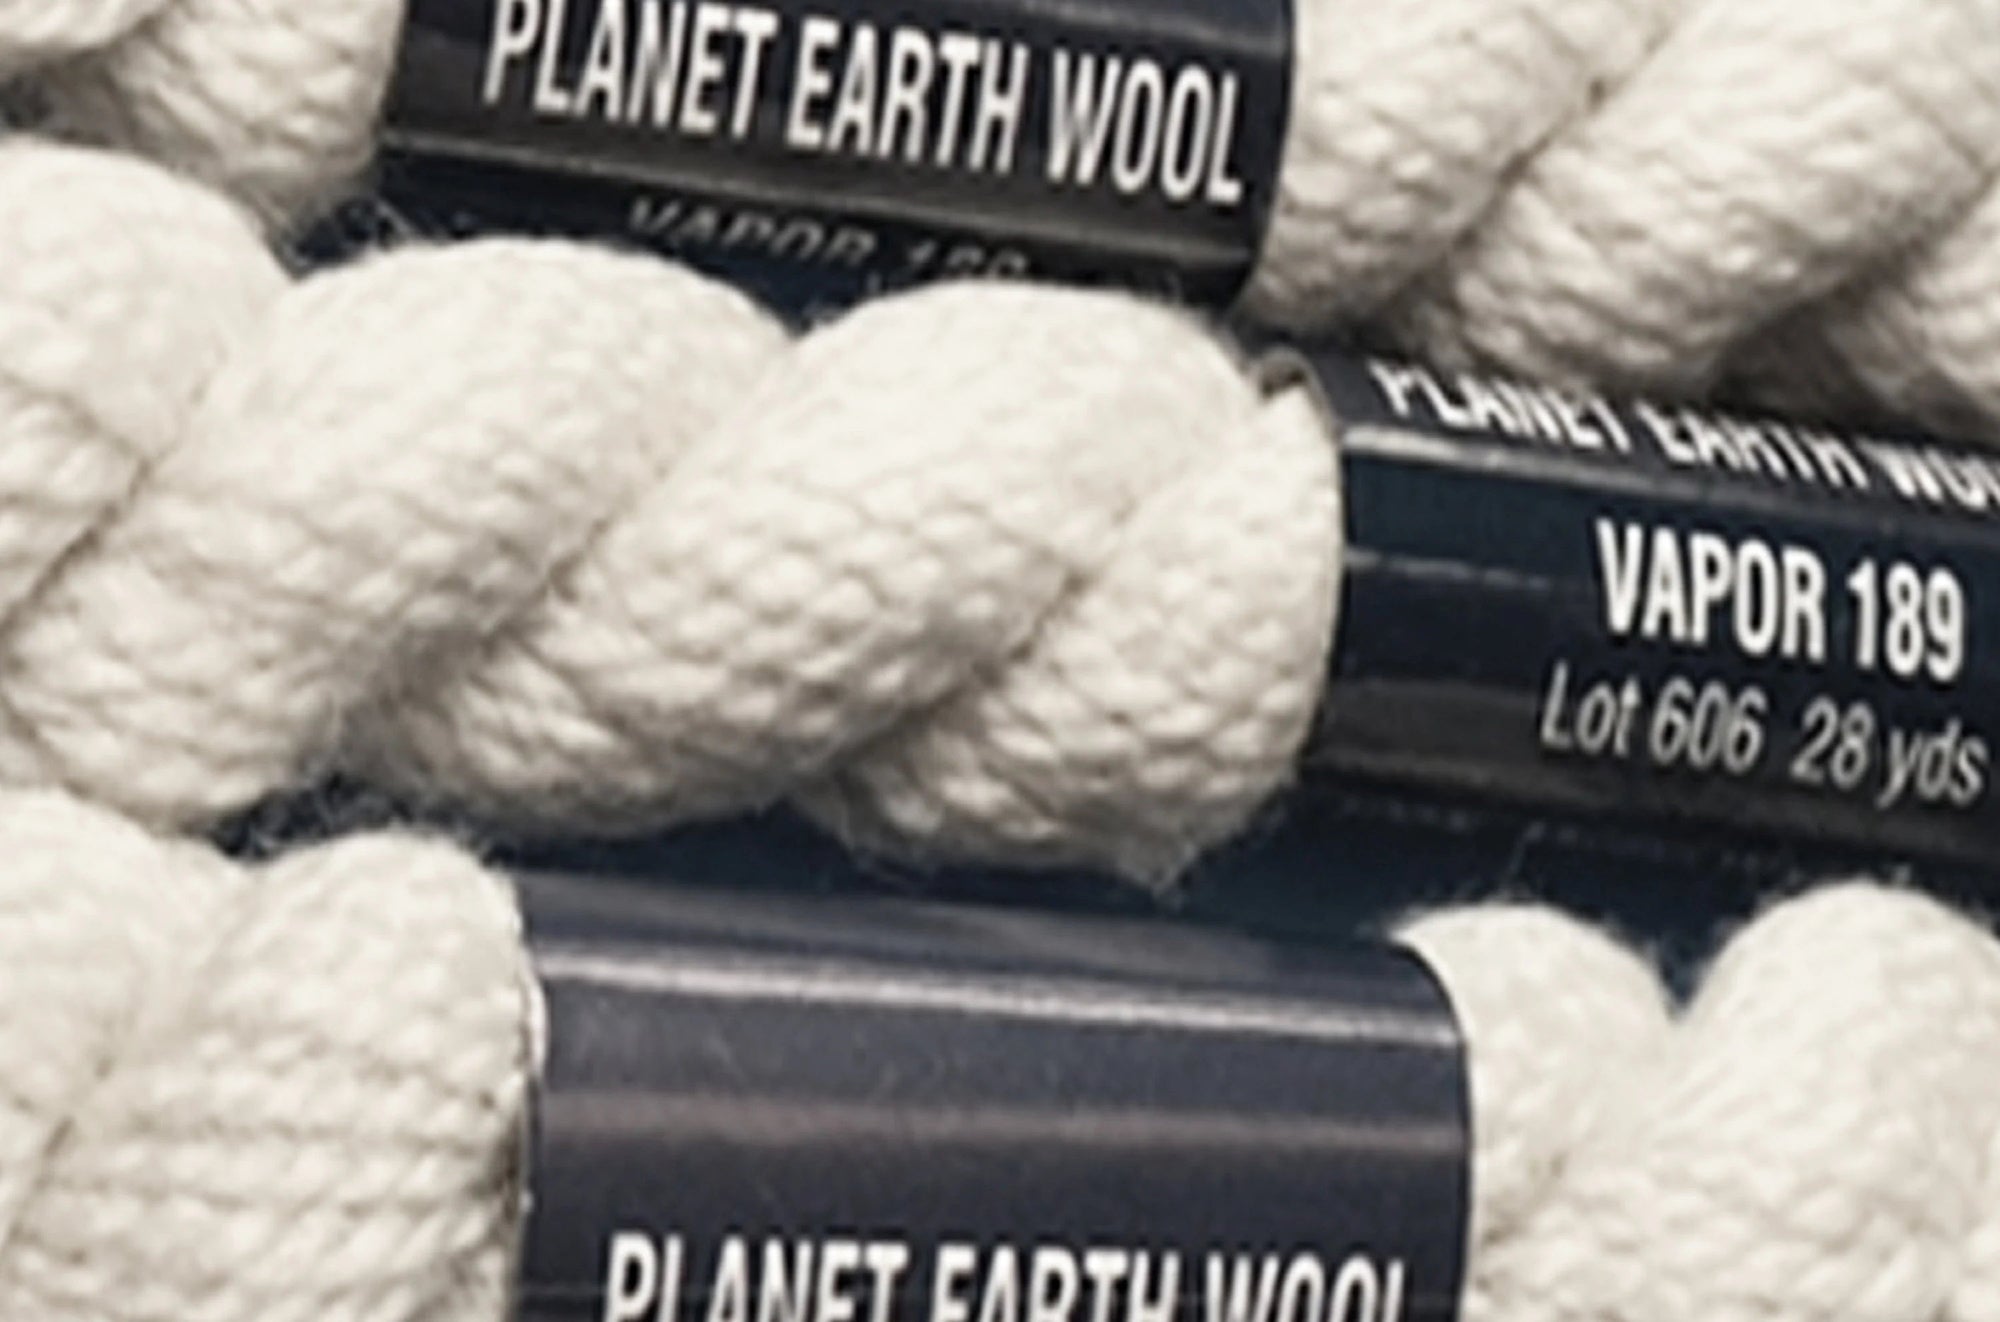 Planet Earth Wool 189 Vapor - The Flying Needles